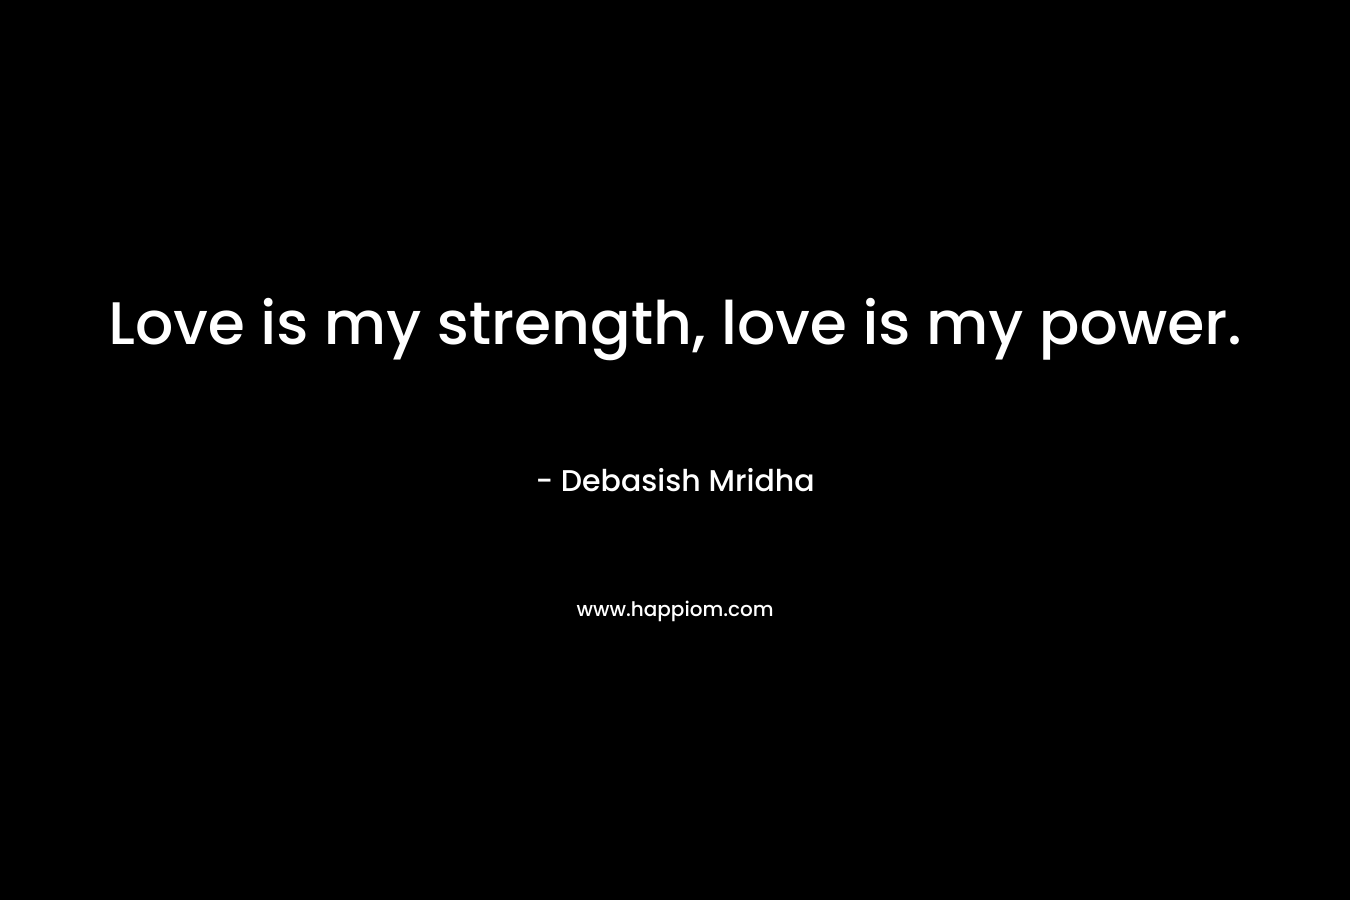 Love is my strength, love is my power.